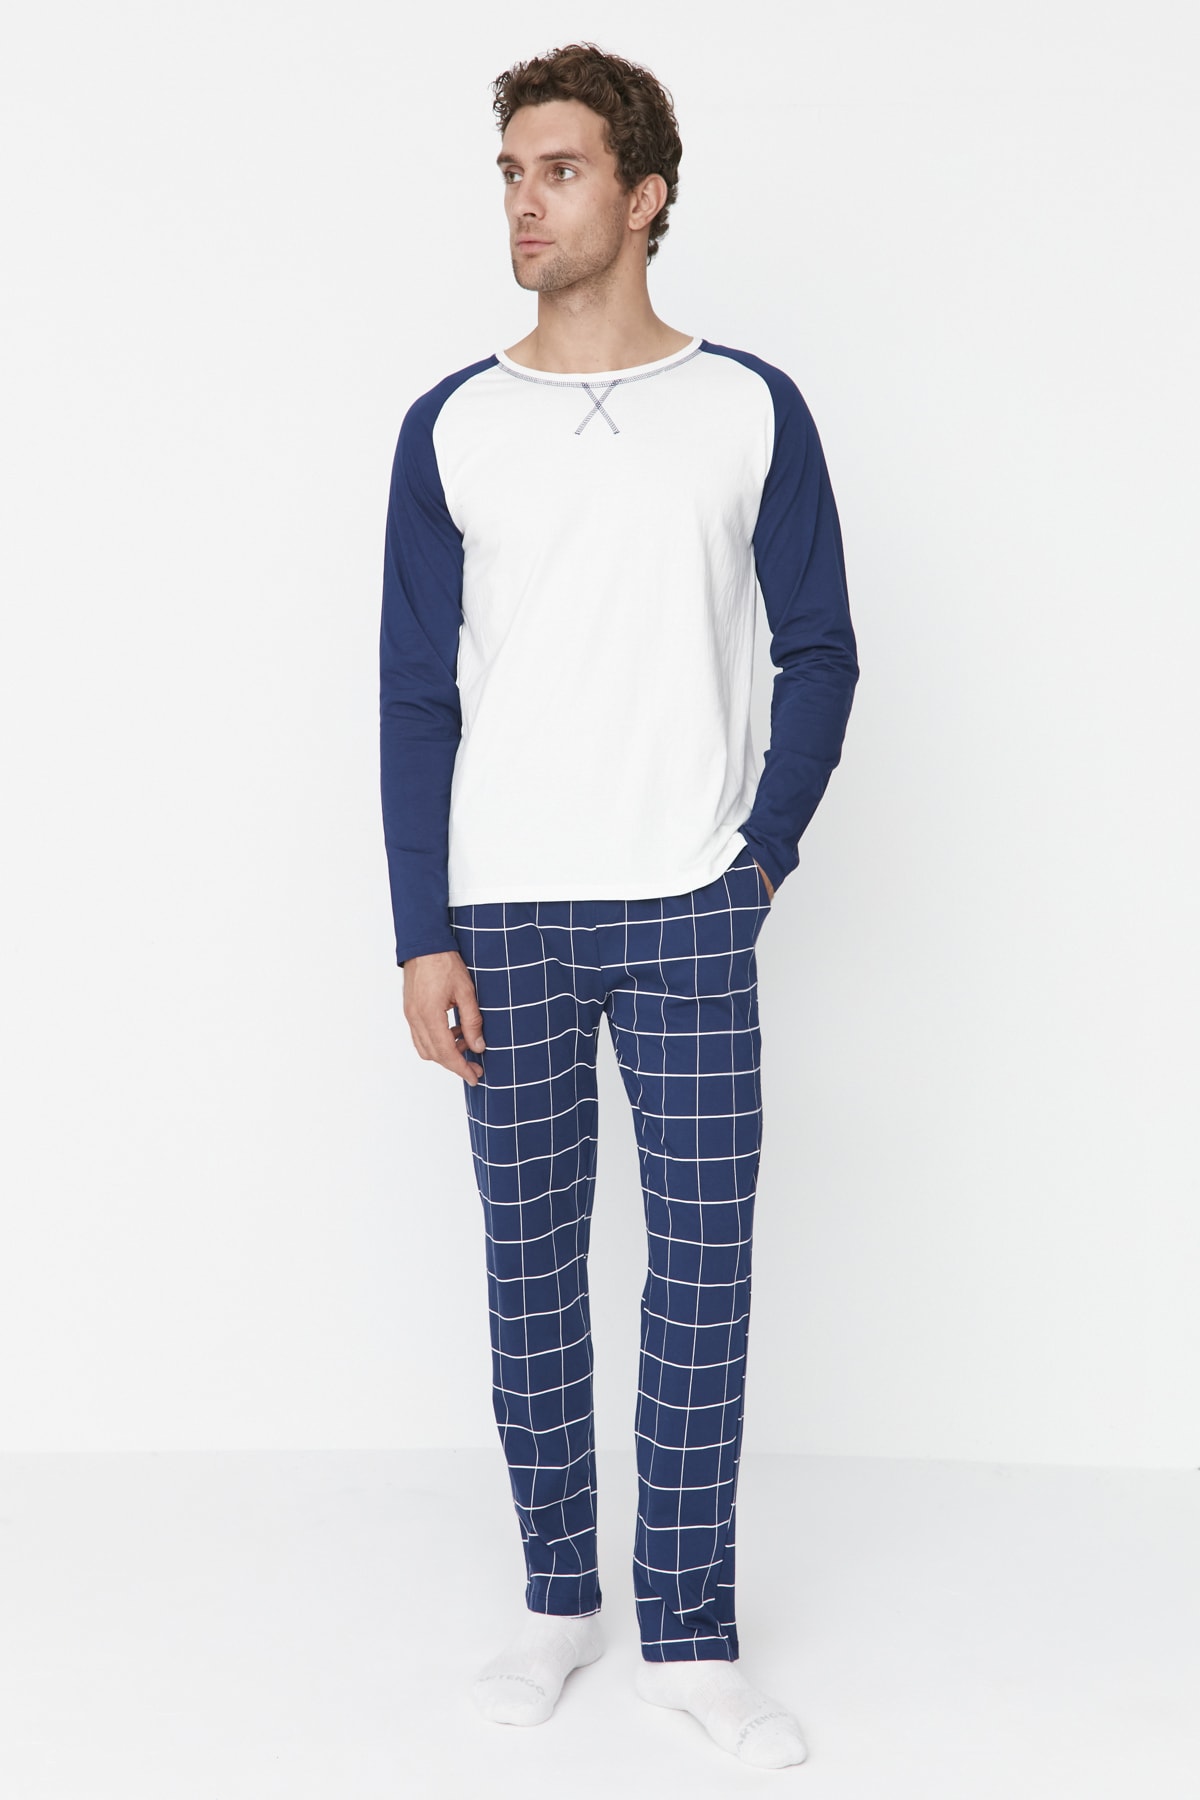 Trendyol Navy Blue Men's 100% Cotton Plaid Knitted Pajamas Set